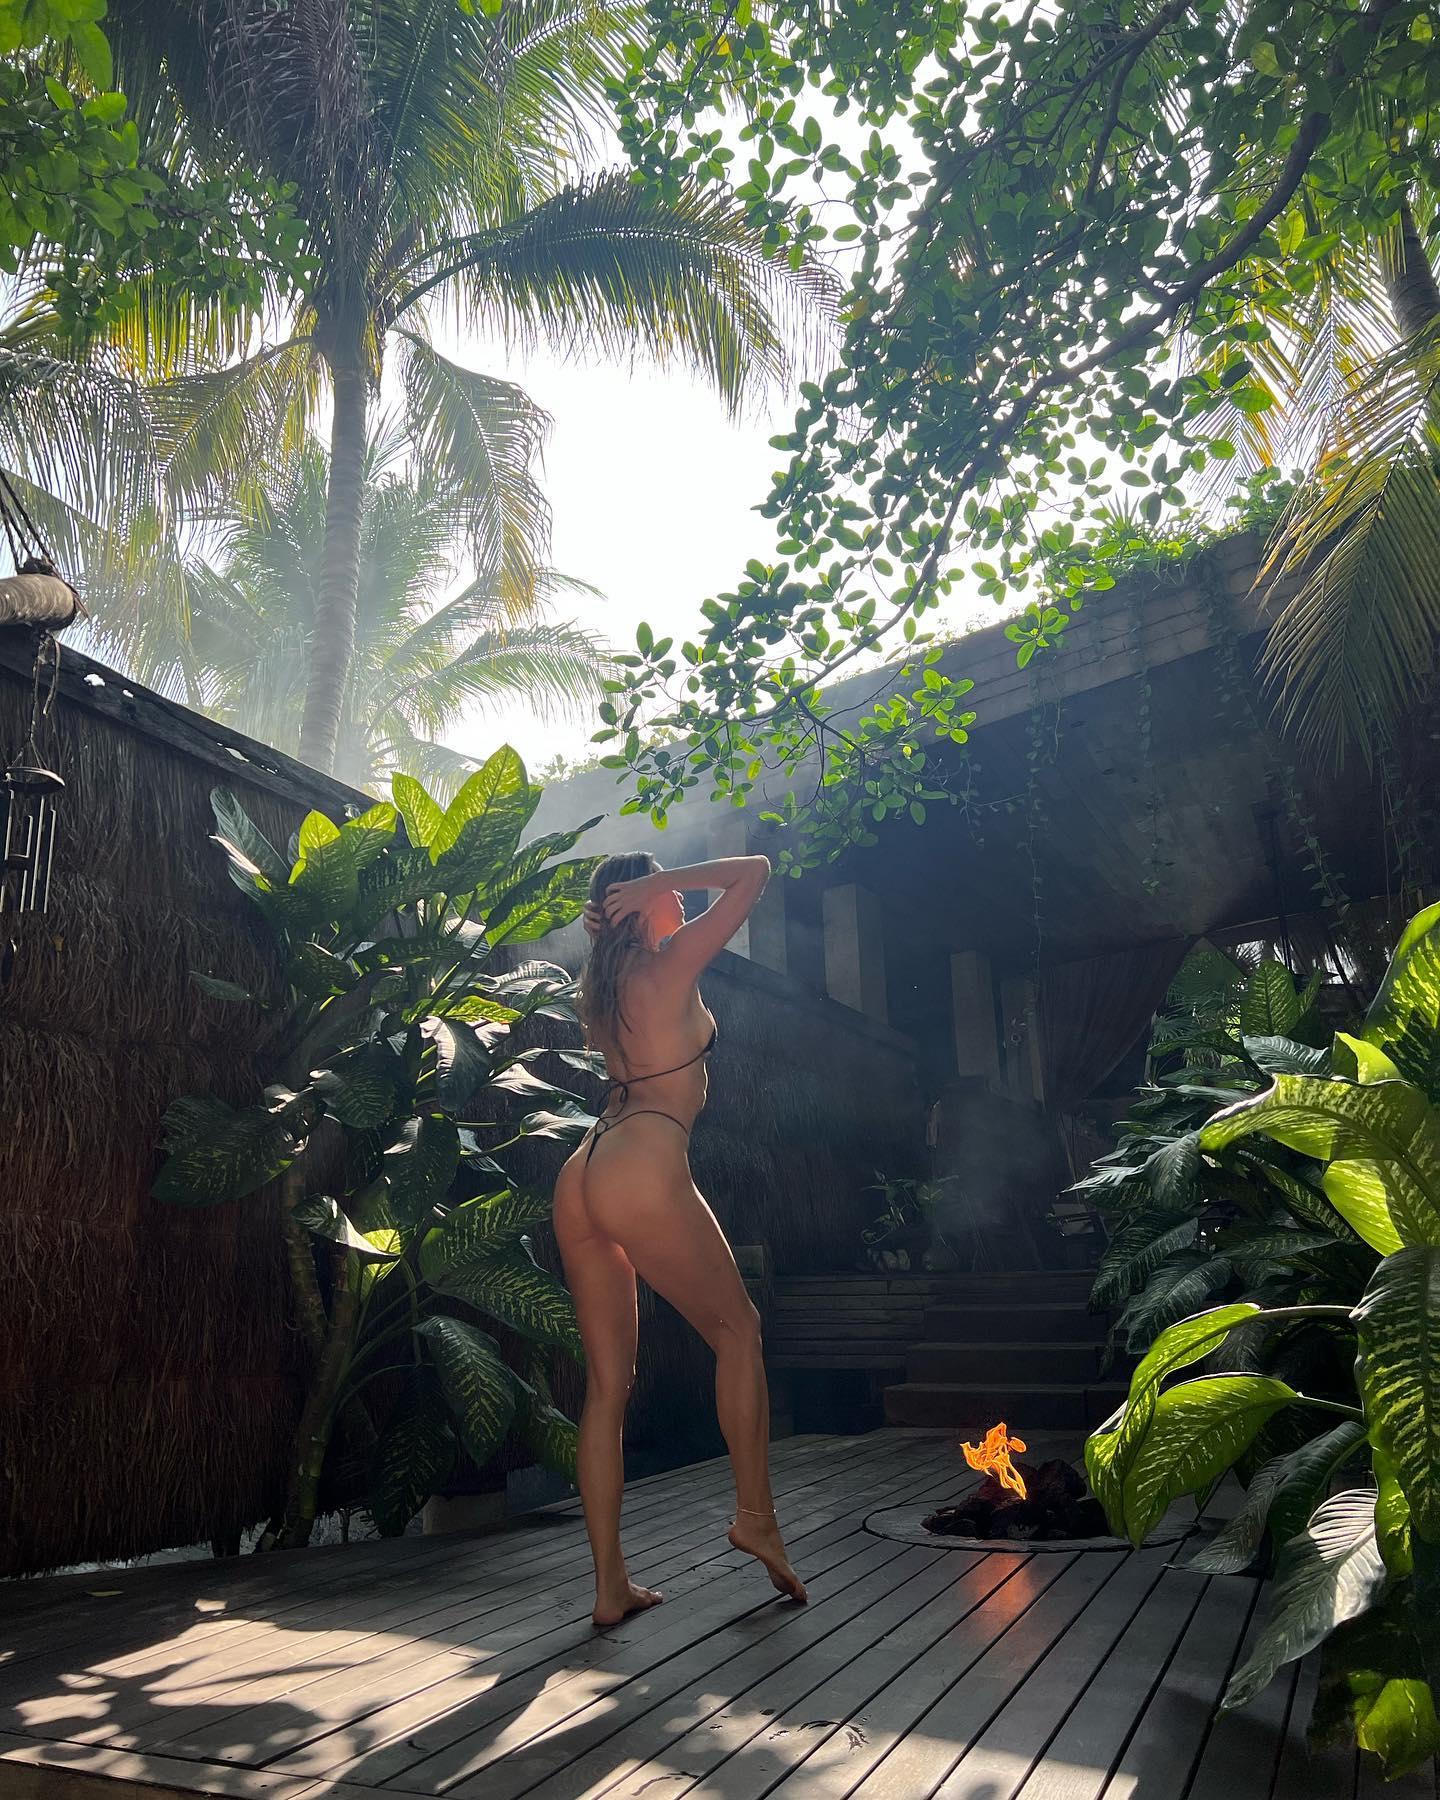 Jenna Lee in the jungle in a black thong bikini